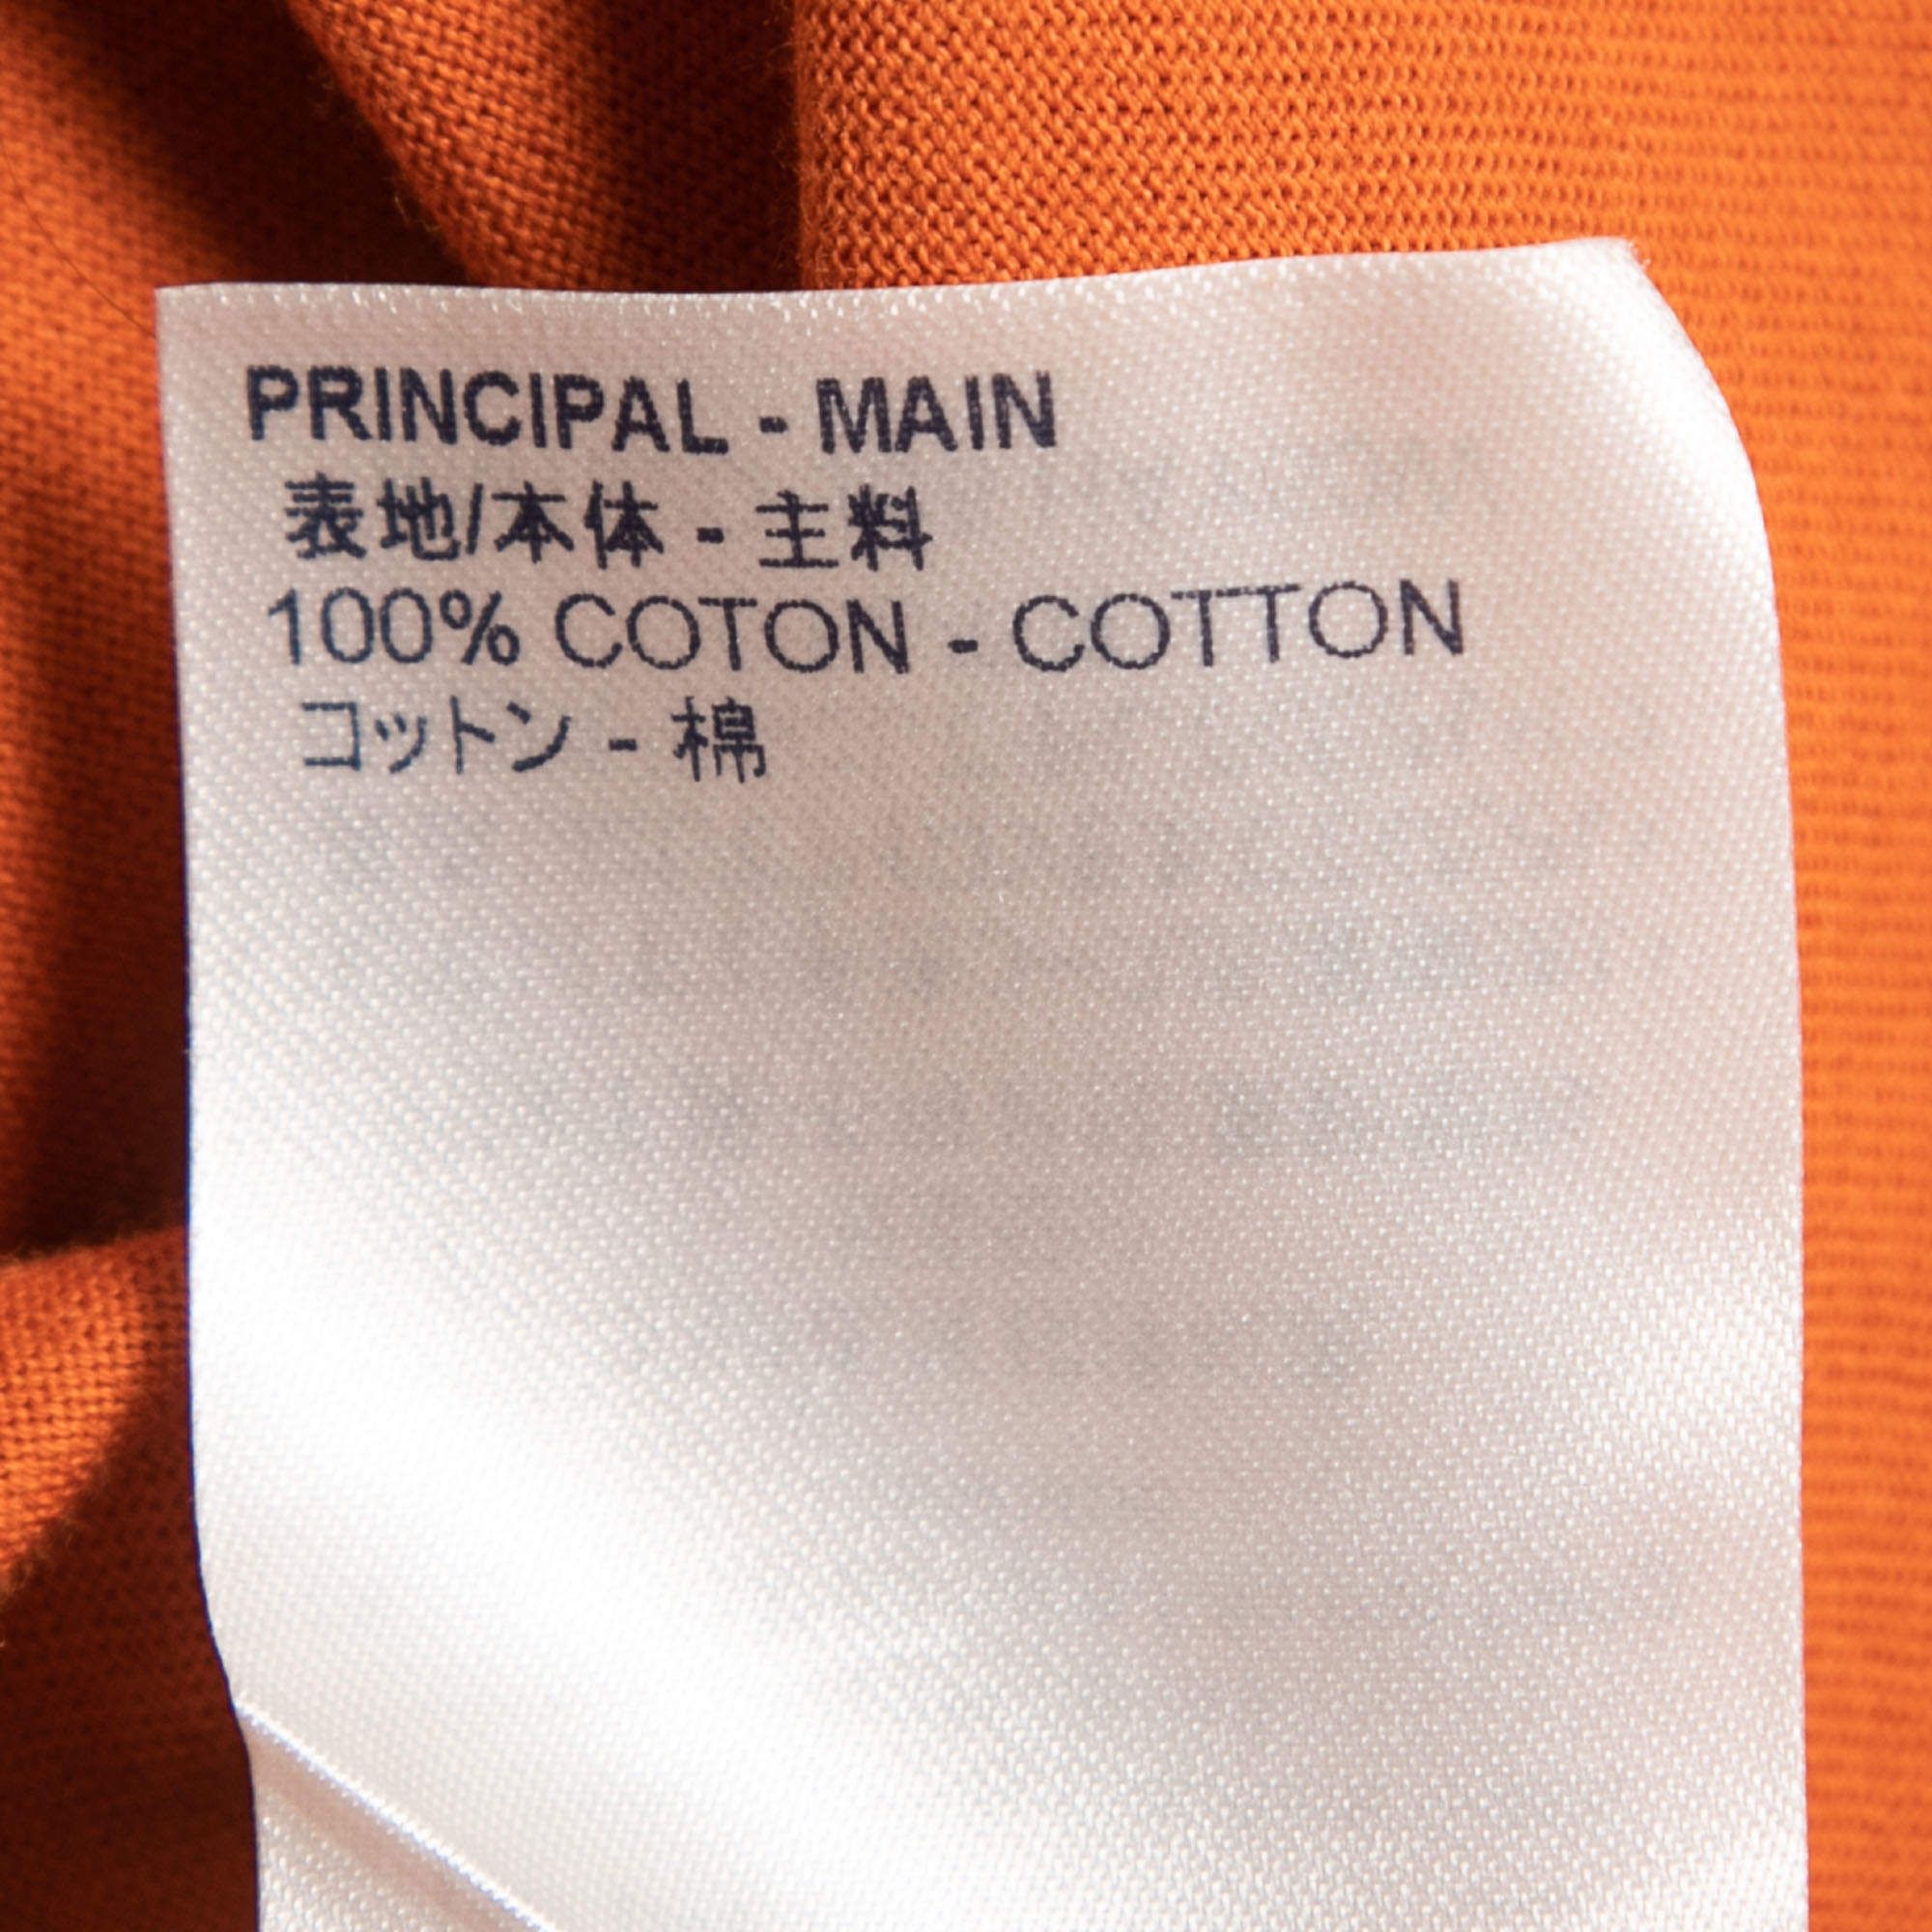 Louis Vuitton Orange Cotton Crew Neck Half Sleeve T-Shirt L